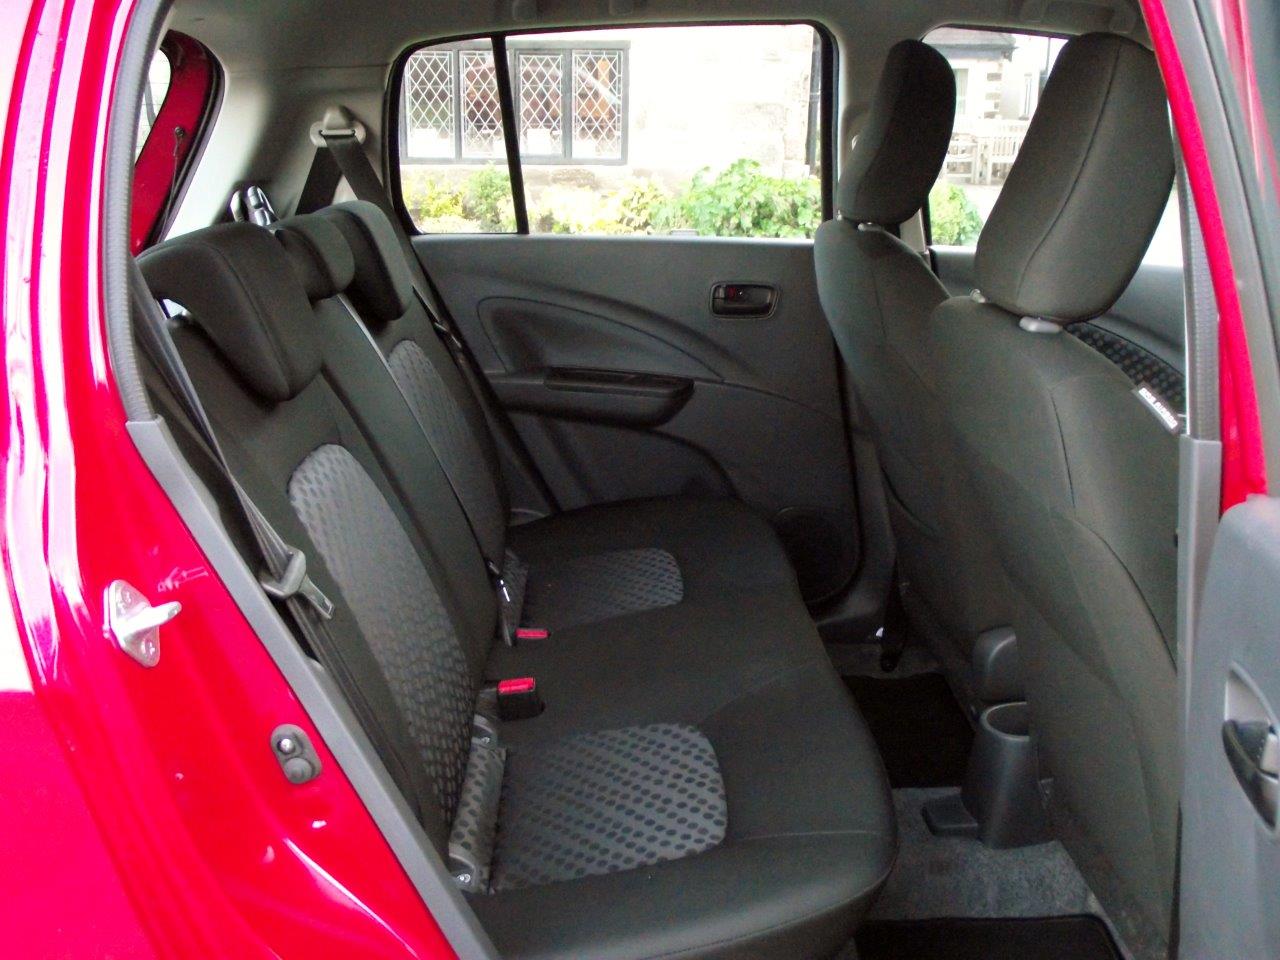 Suzuki Celerio 1.0 rear seats